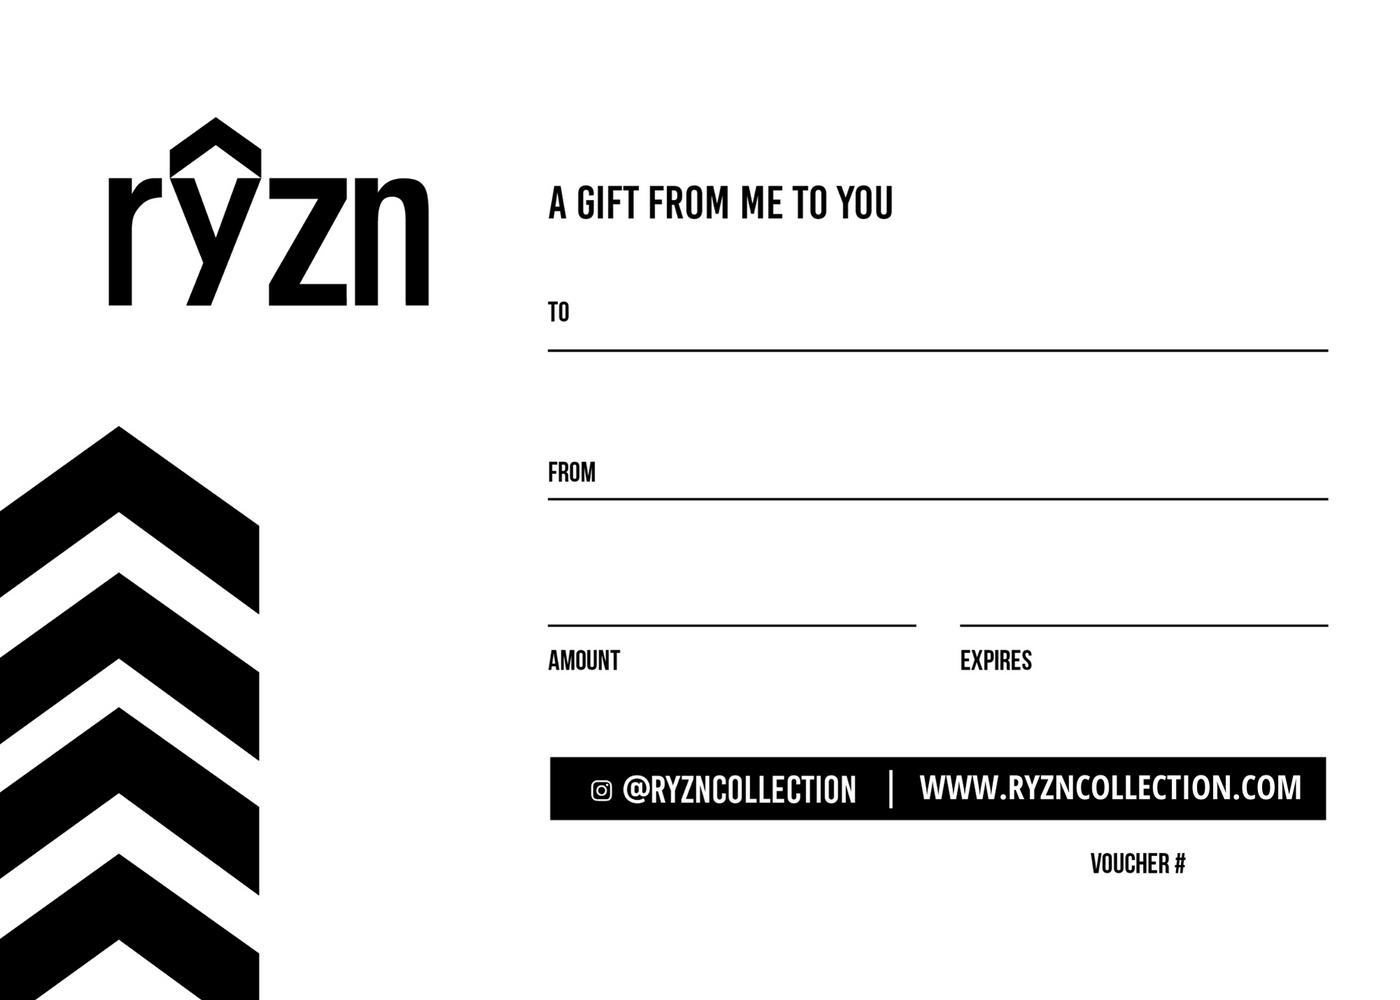 RYZN COLLECTION gift card